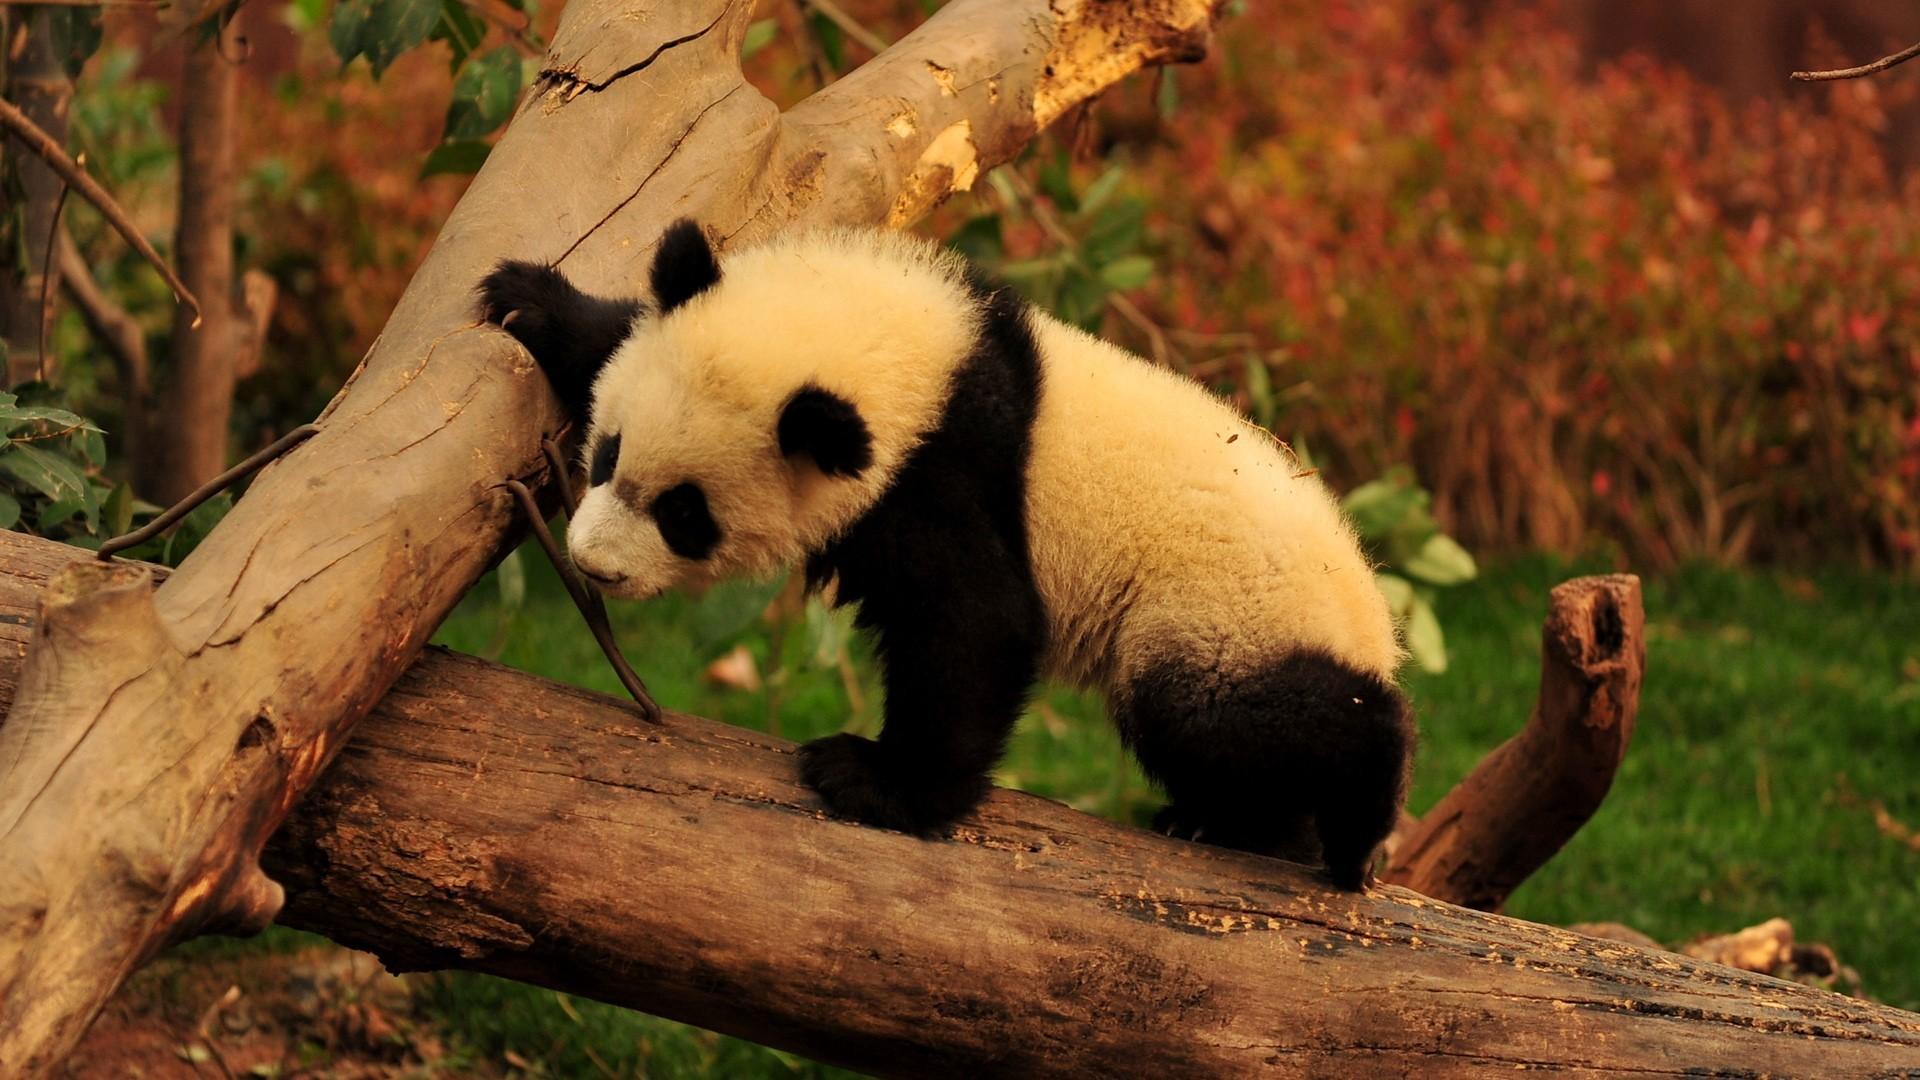 Adorable panda bear wallpaper. PC